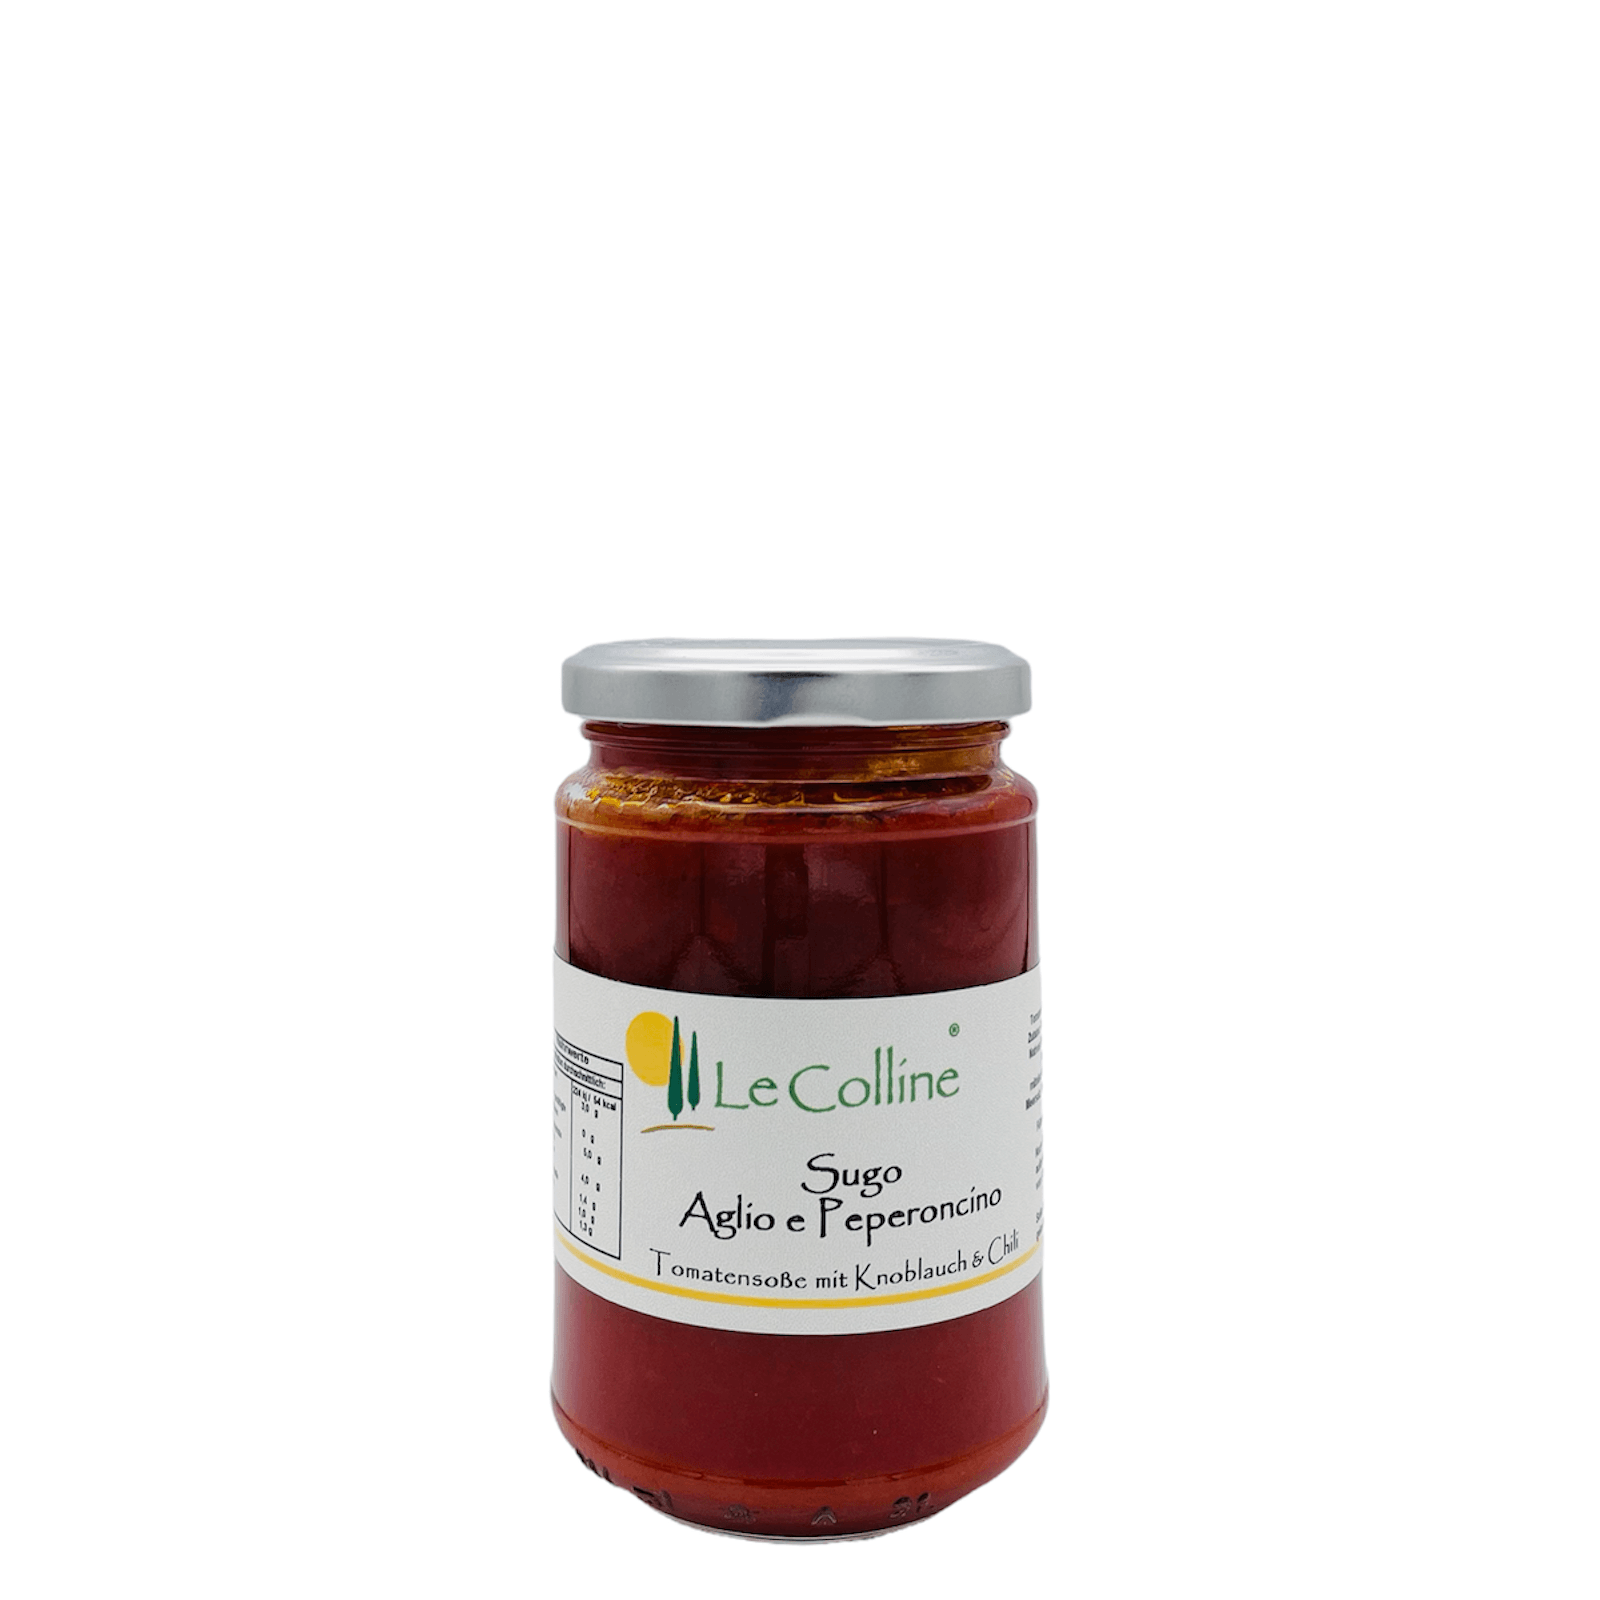 Tomatensoße mit Knoblauch und Chili 280g - Le Colline Store